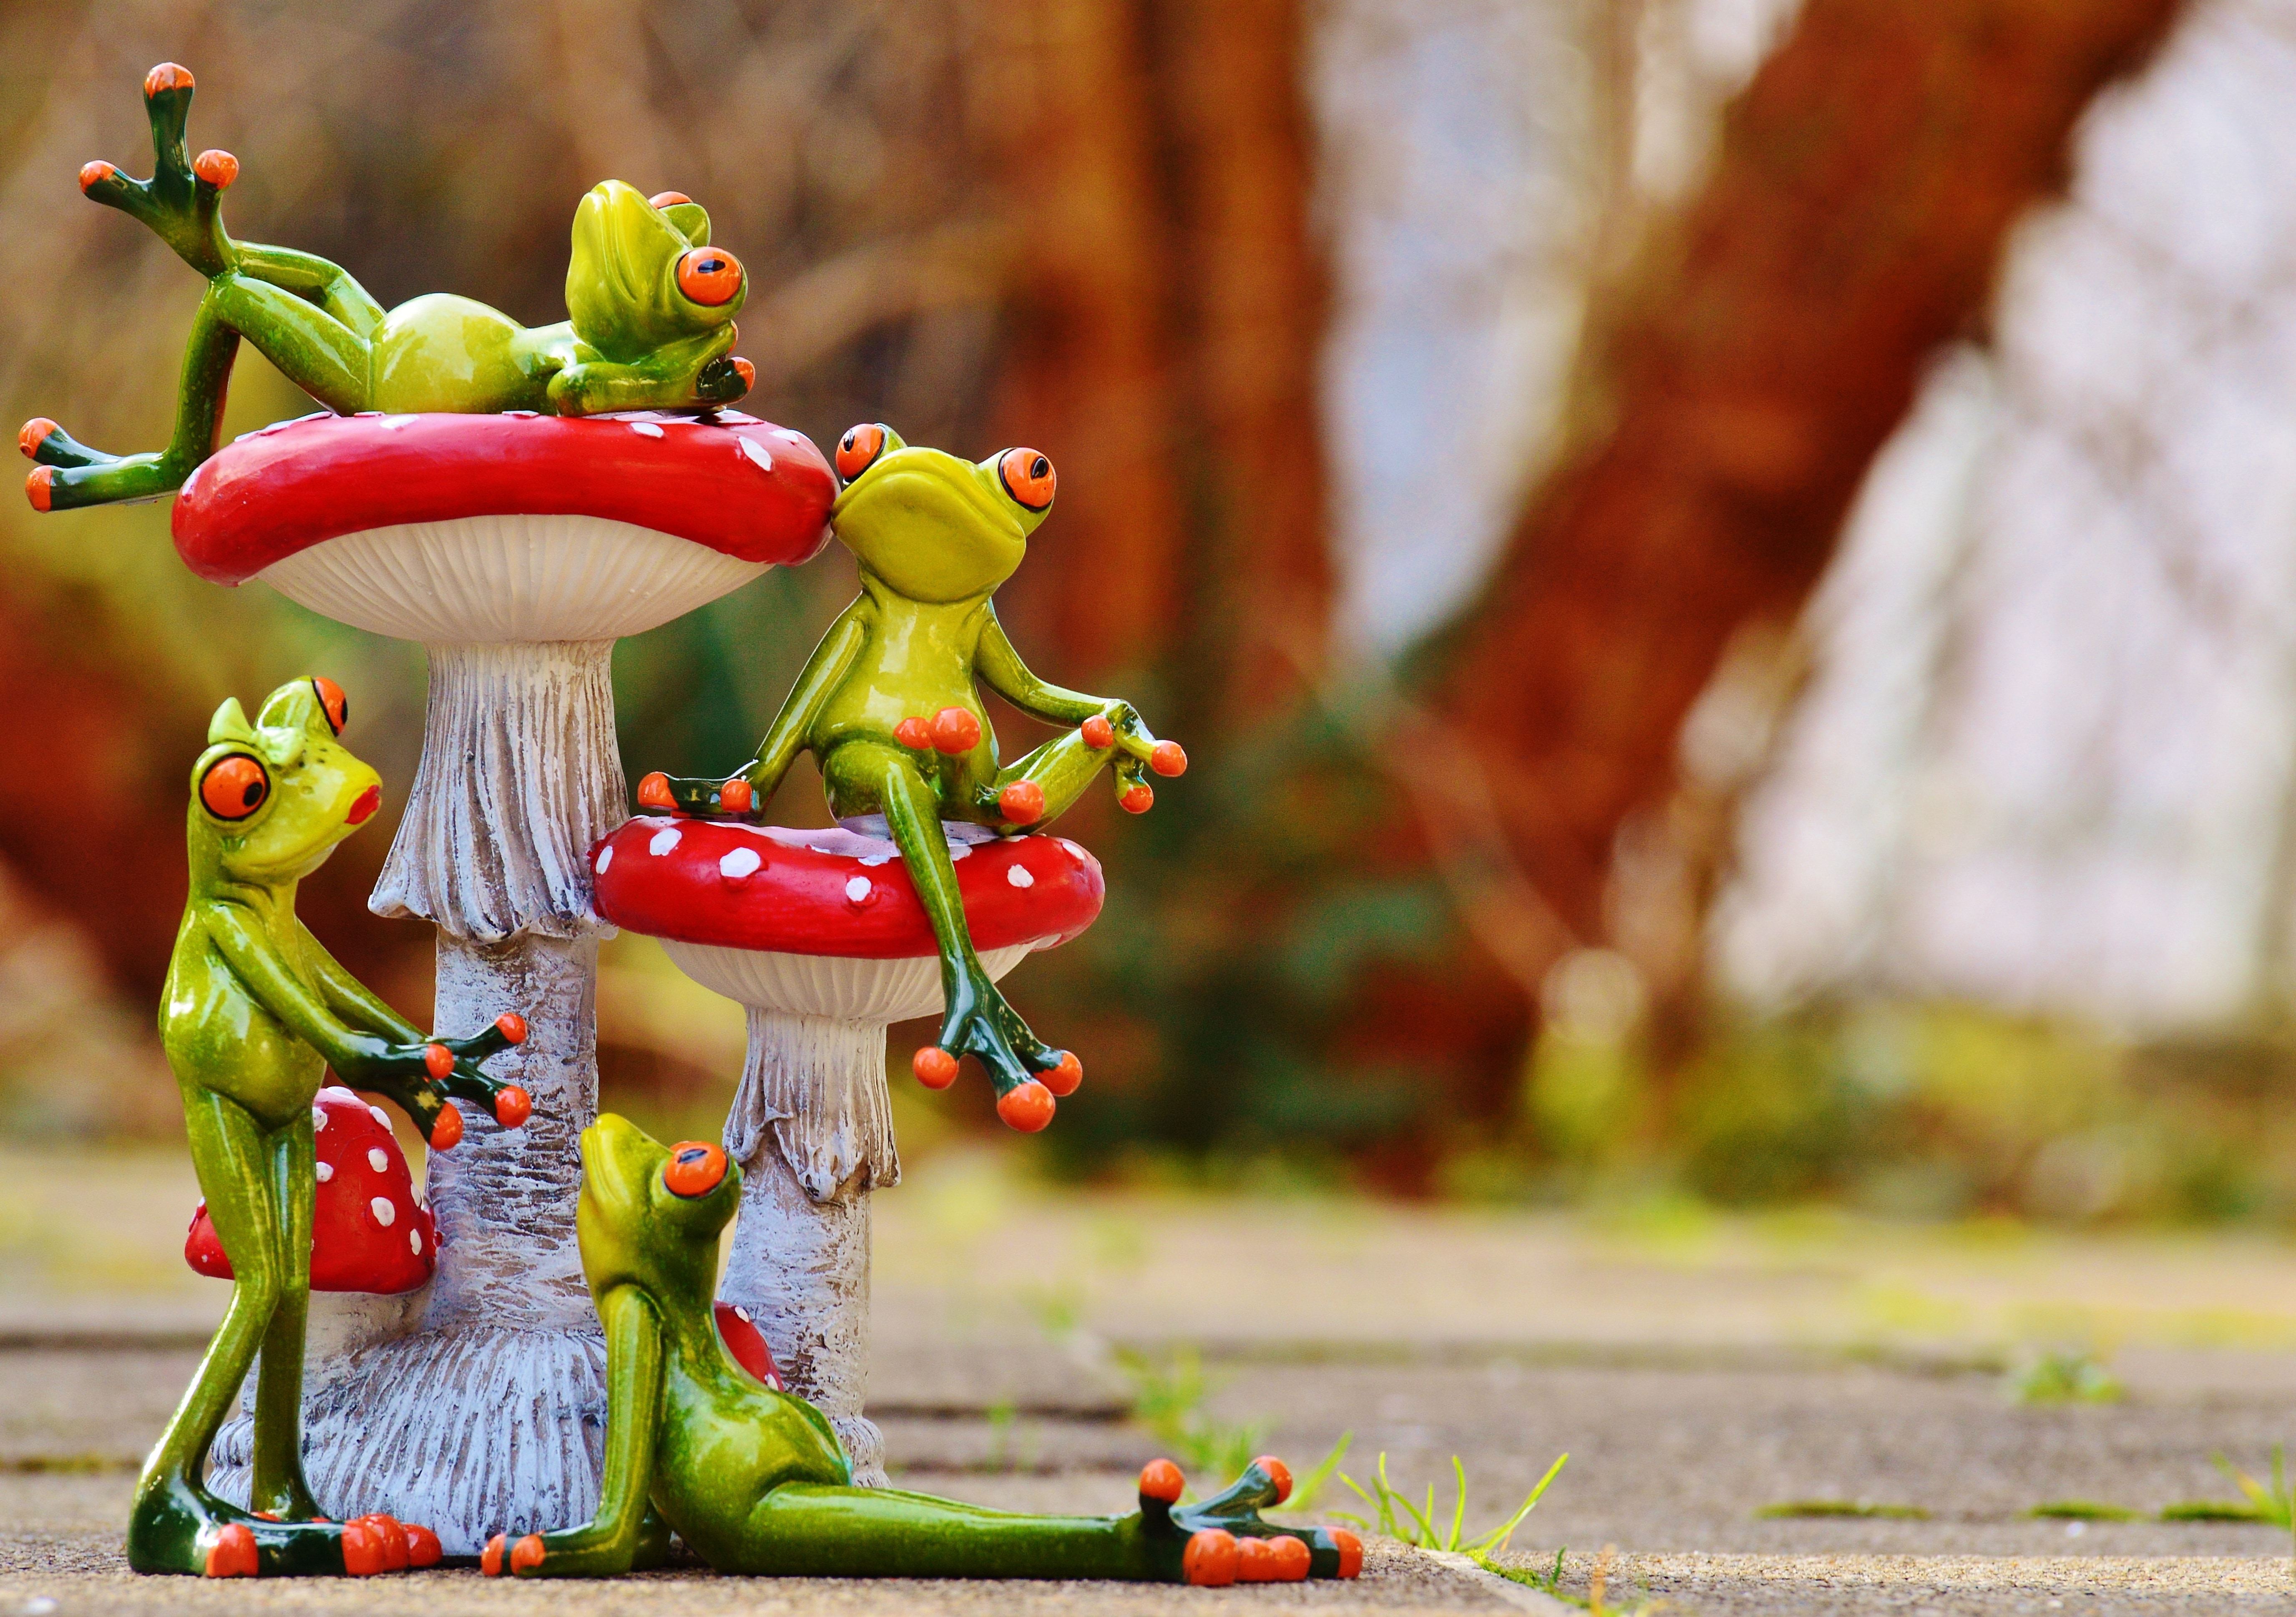 Mushrooms, Cute, Figures, Funny, Frogs, basket, food and drink